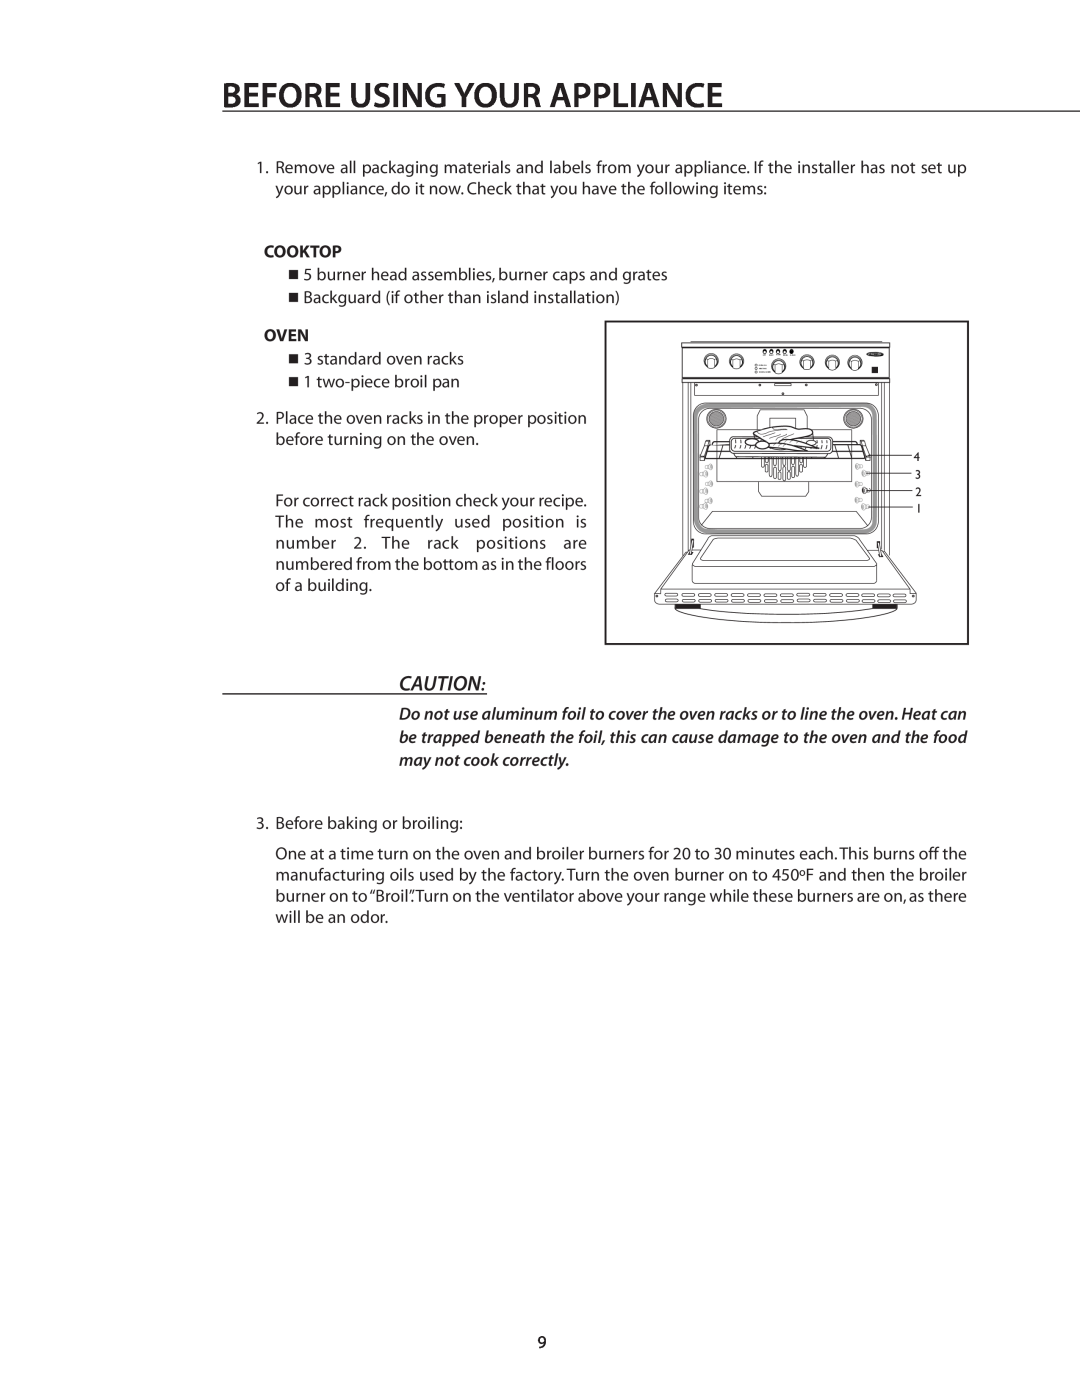 DCS RGSC-305WT, RGSC-305BK, RGSC-305SS manual Before Using Your Appliance, Cooktop, Oven 